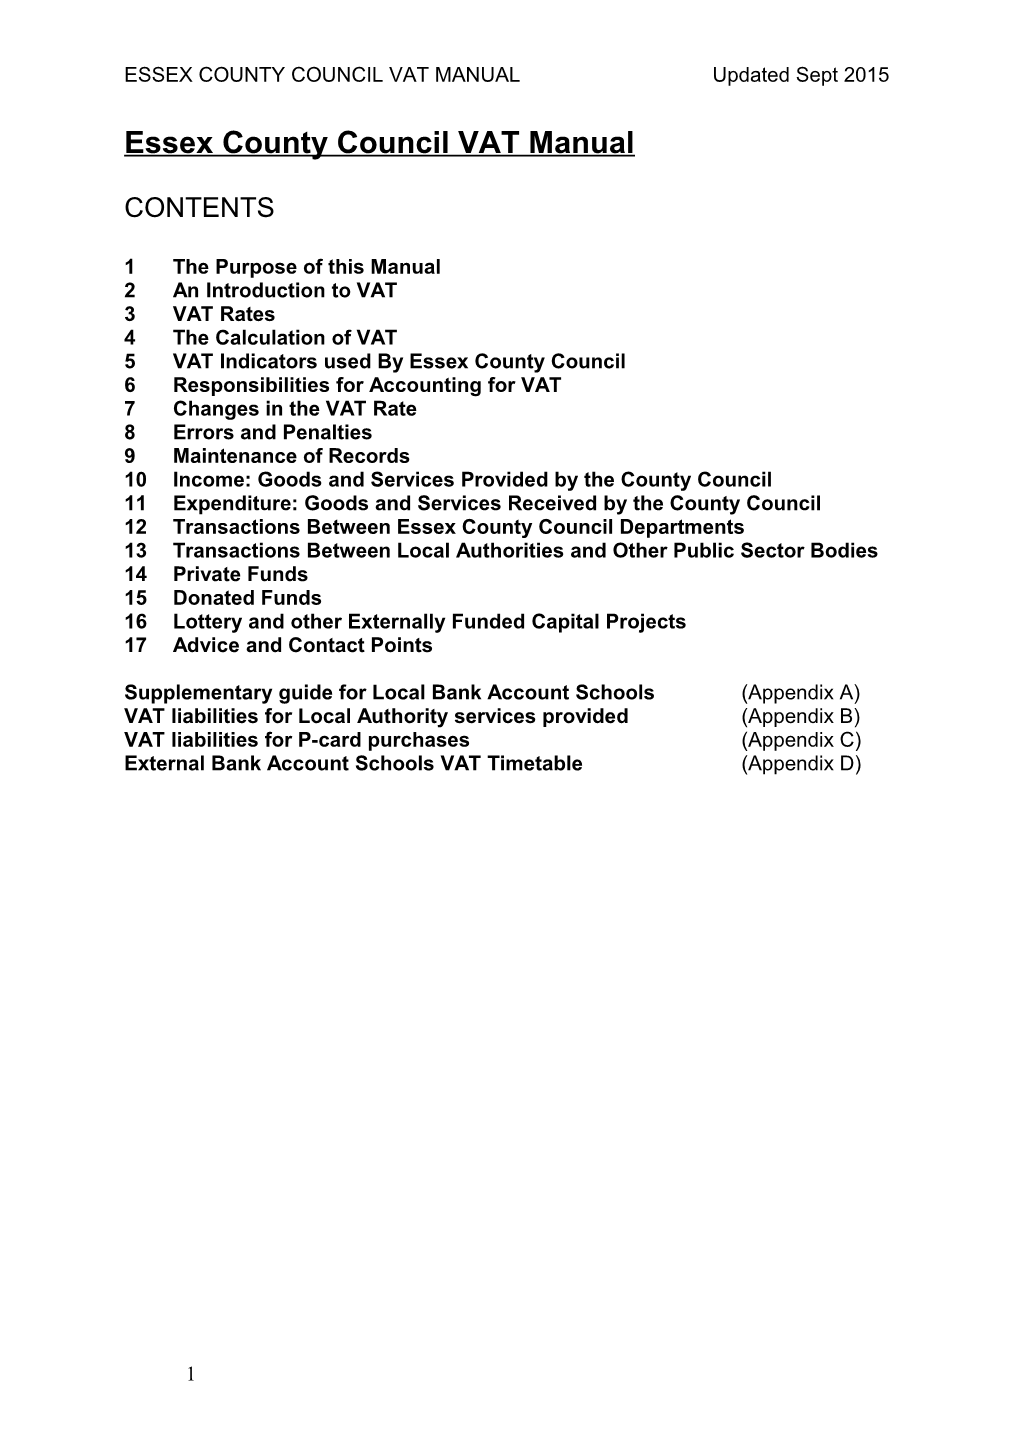 Essex County Council VAT Manual